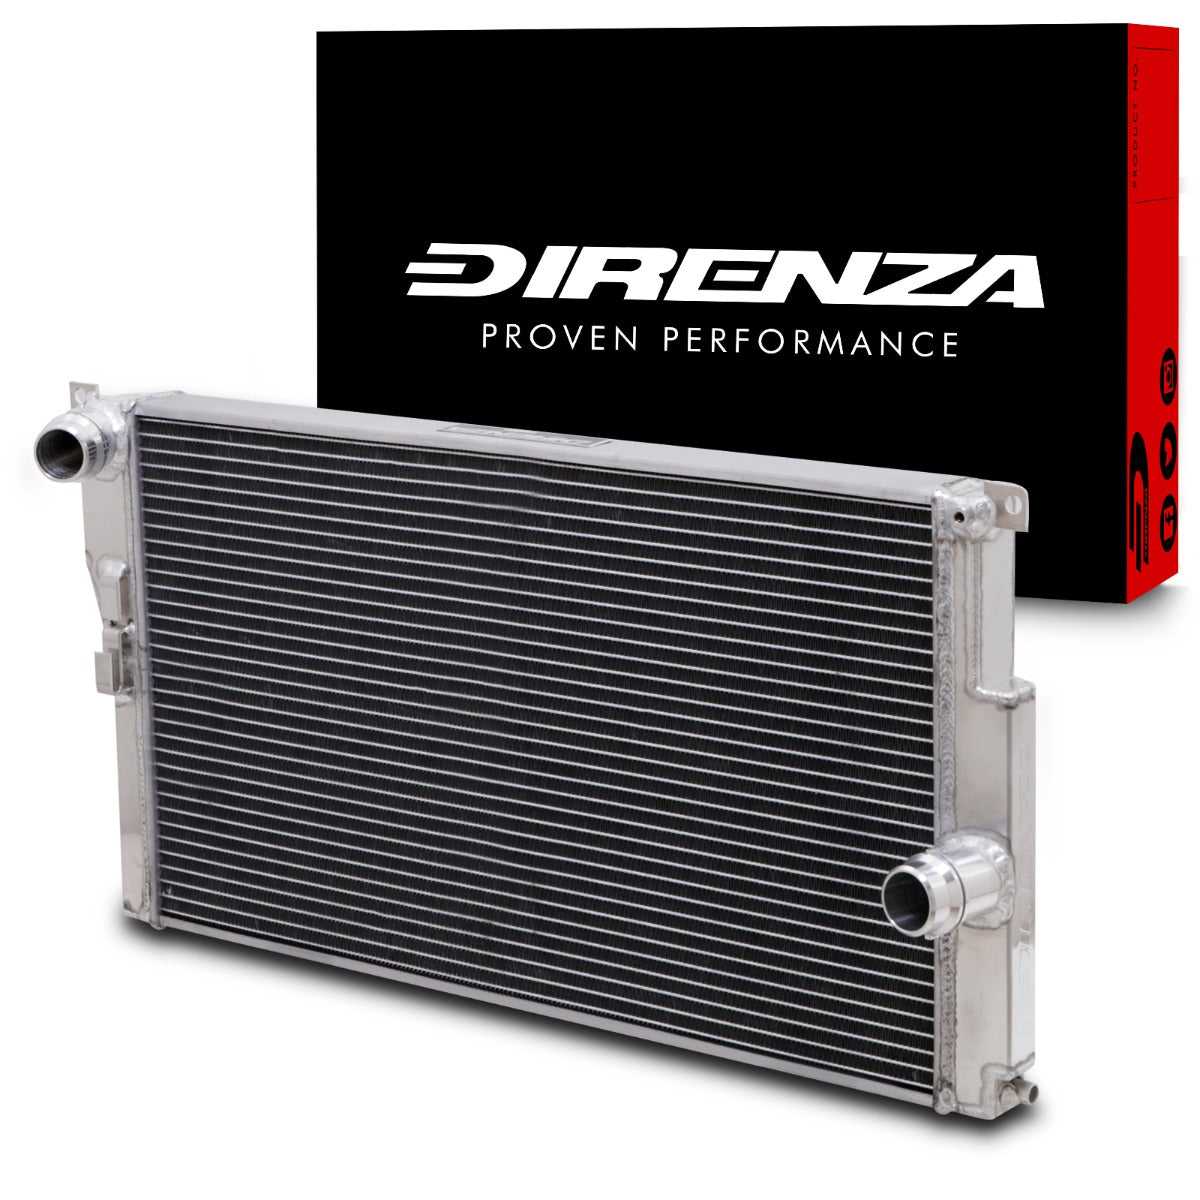 Direnza, Direnza - BMW 3 Series F30 320d 08+ - Aluminium Performance Radiator